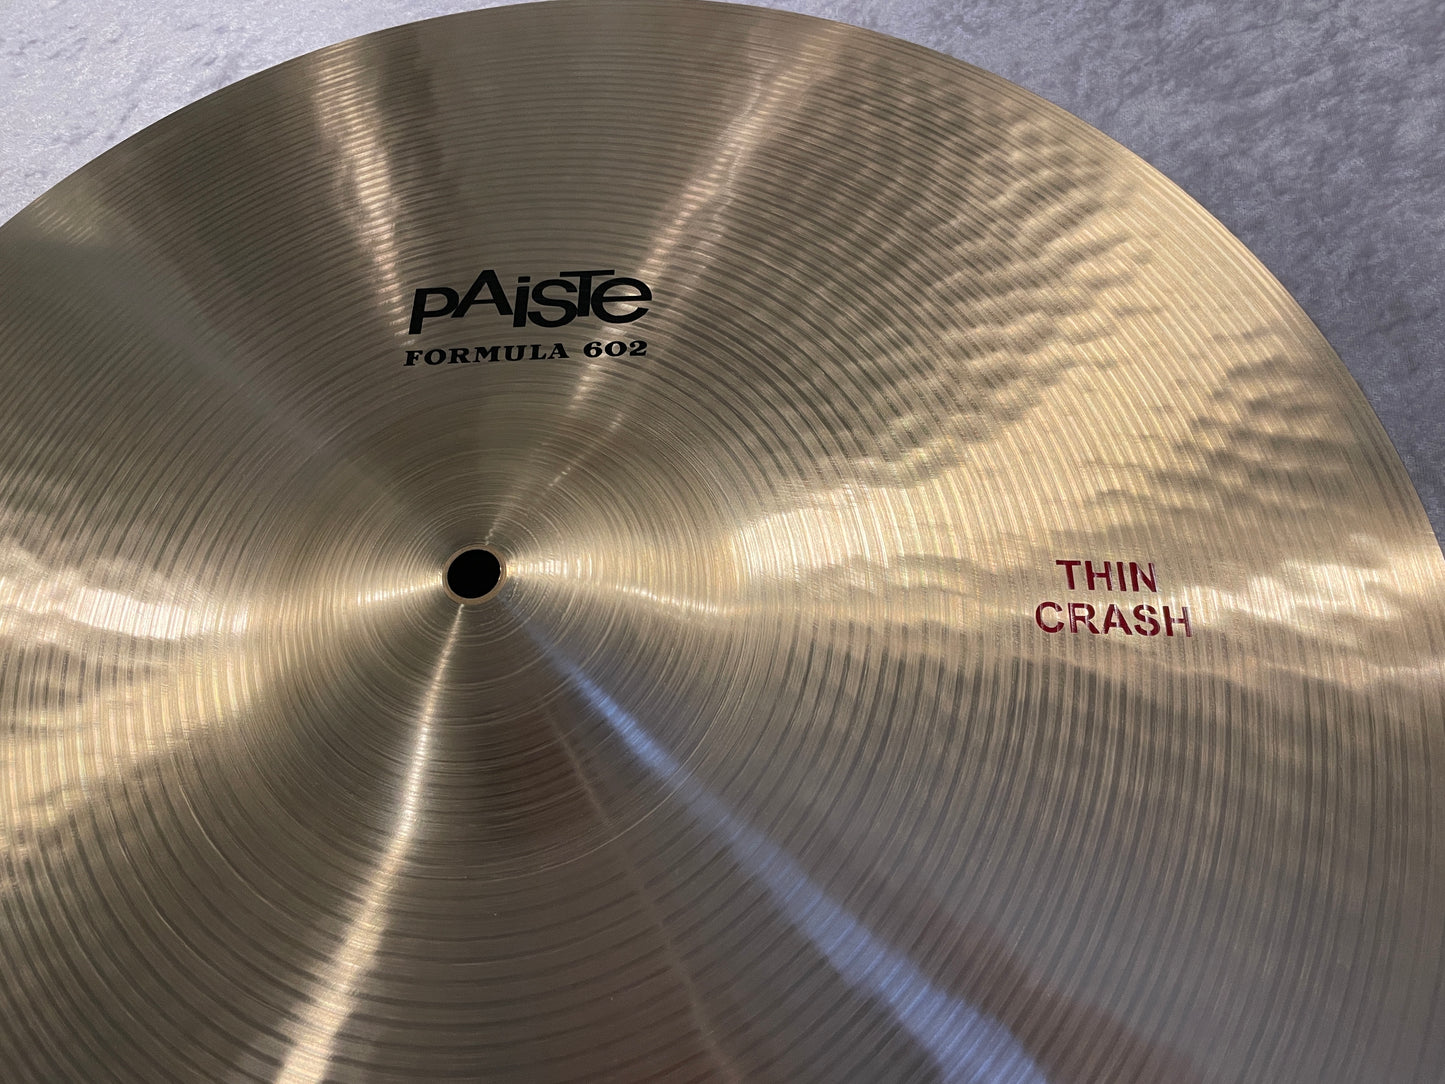 19" Paiste 602 Classic Thin Crash Cymbal 1592g